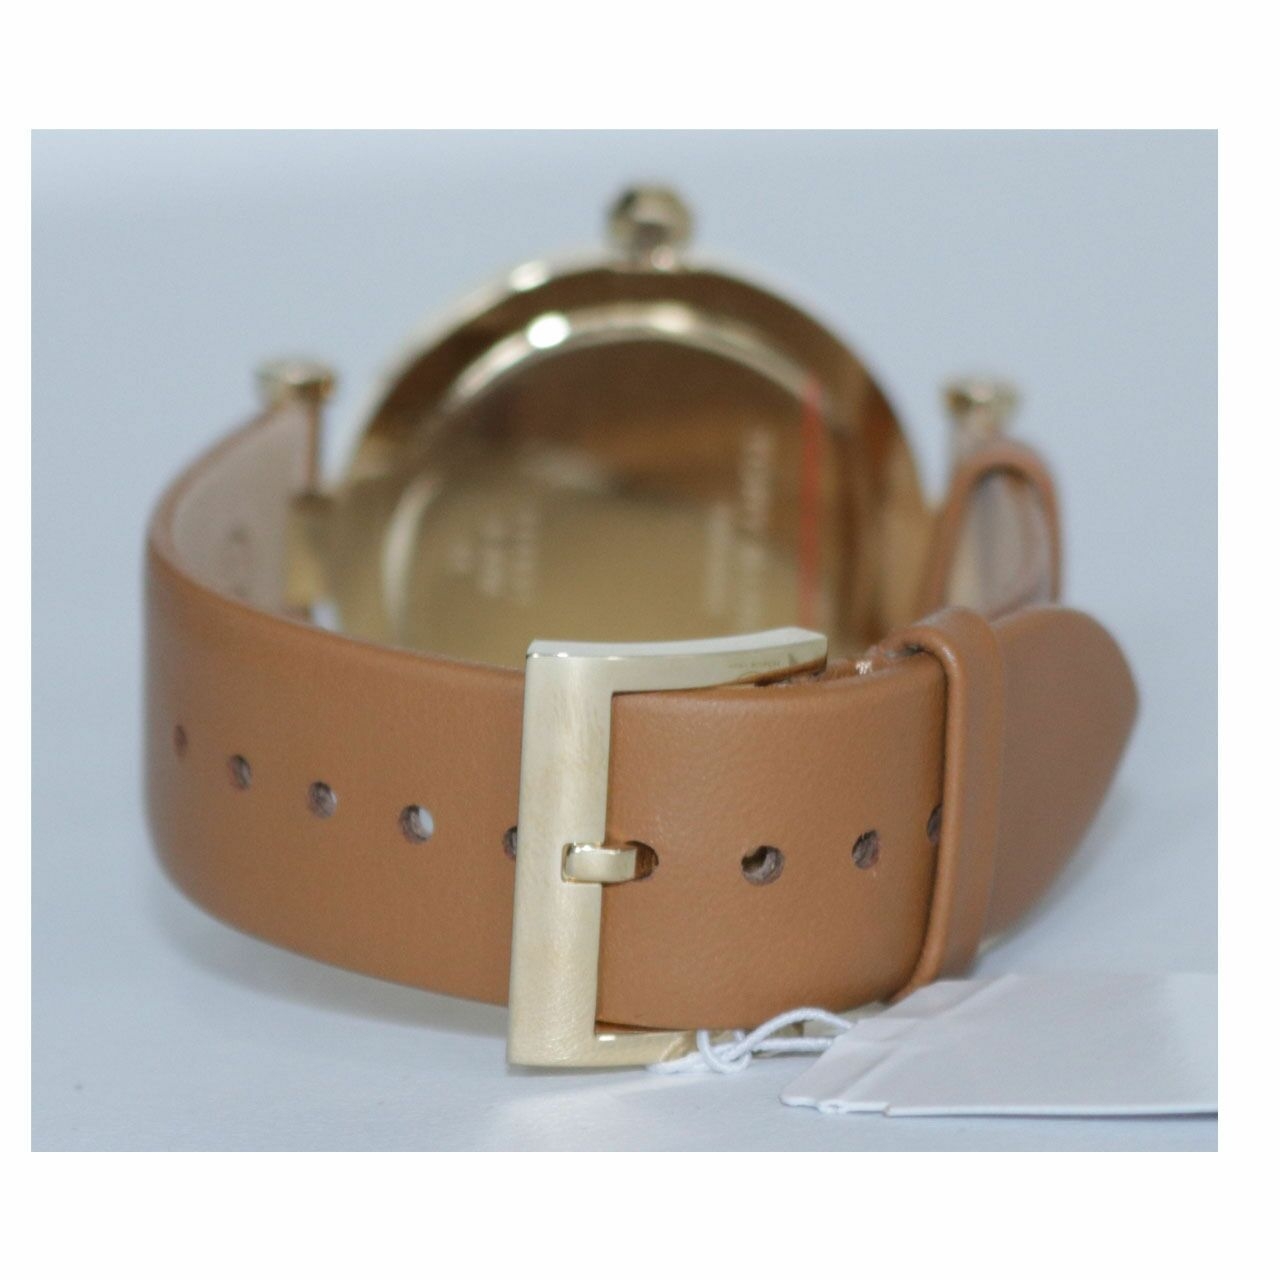 Tory Burch Classic T Watch Luggage Leather Gold Tone 35mm Wrist Watch